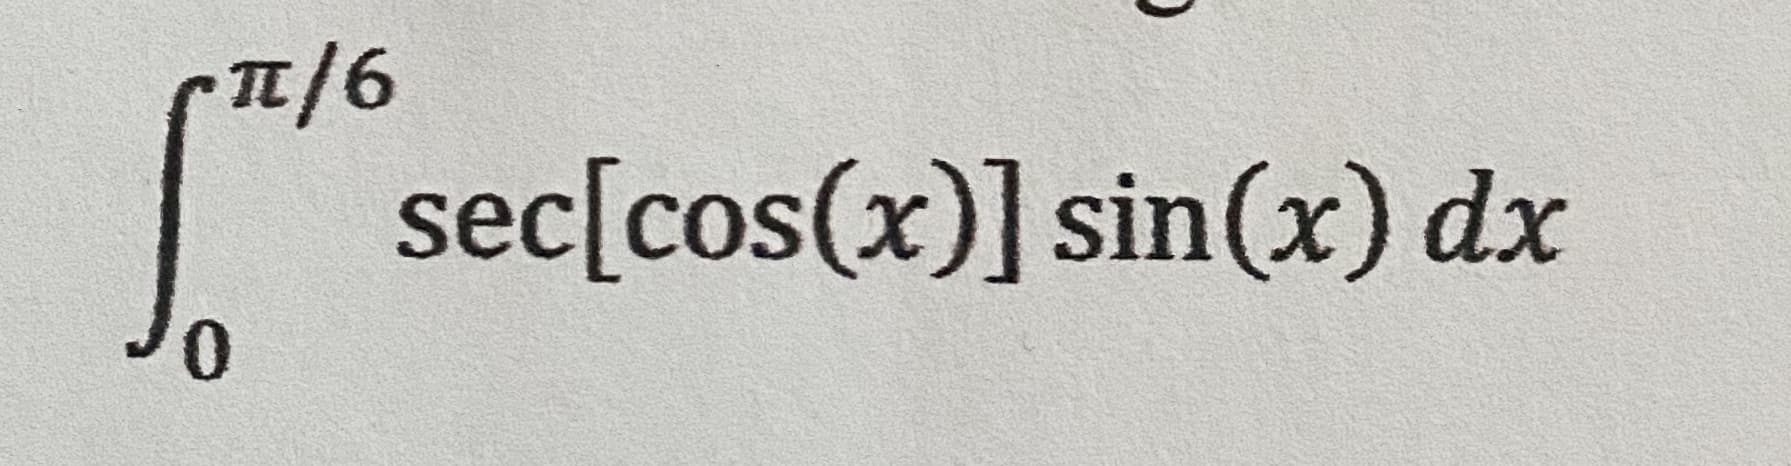 IT/6
sec[cos(x)] sin(x) dx
